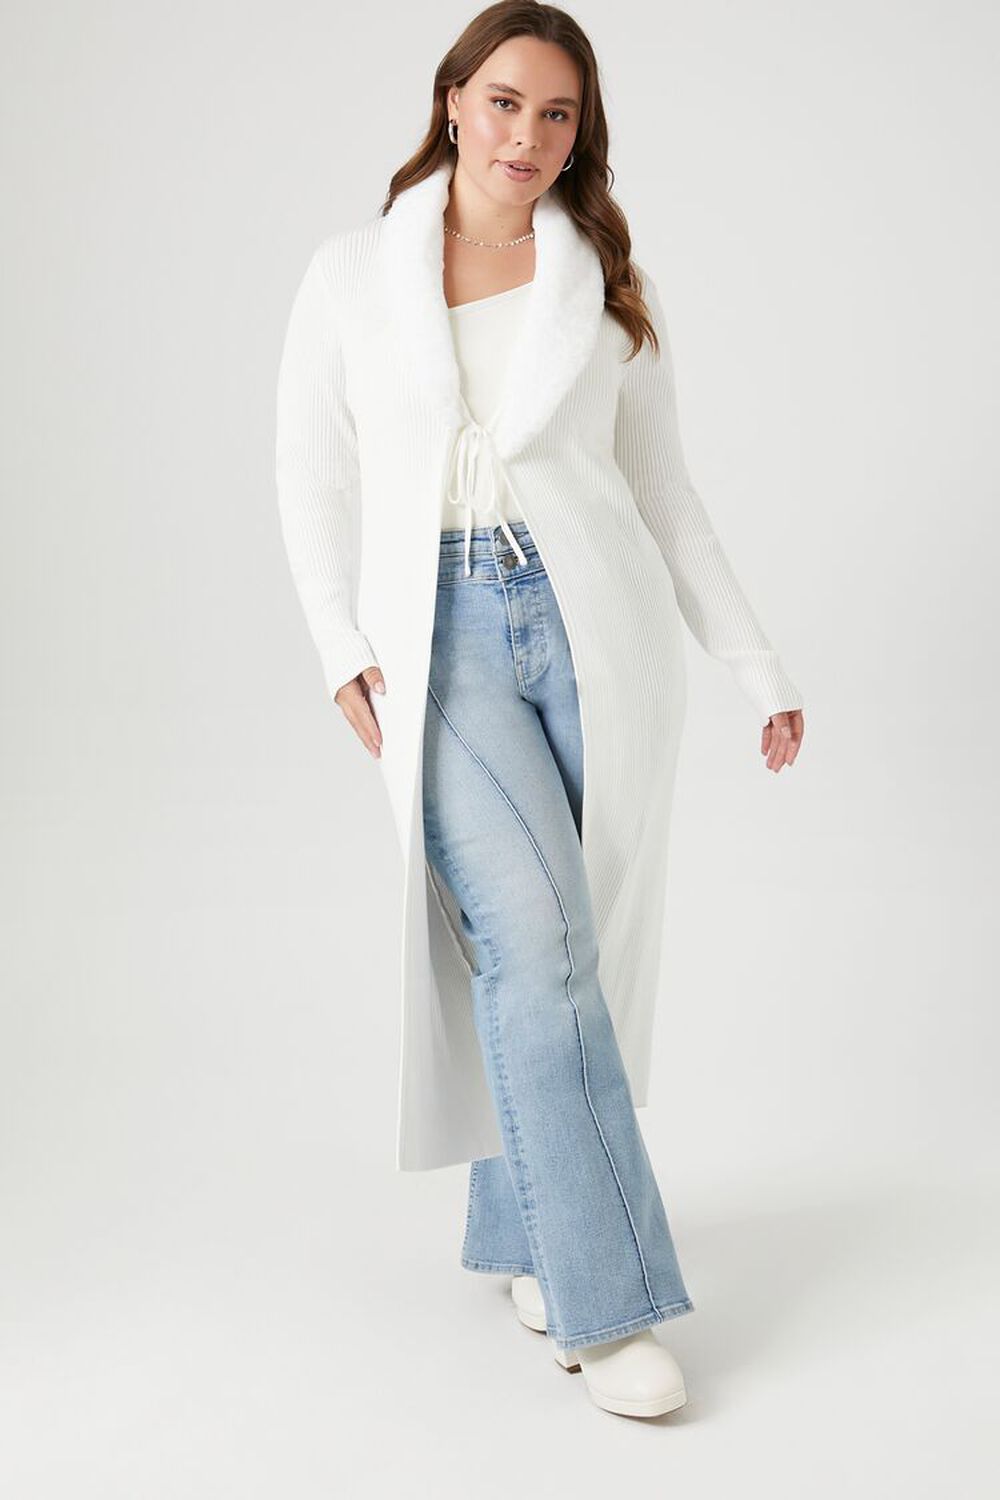 Addition Elle Plus Size Longline Cardigan Sweater Plus Size 1X Wine Color  New